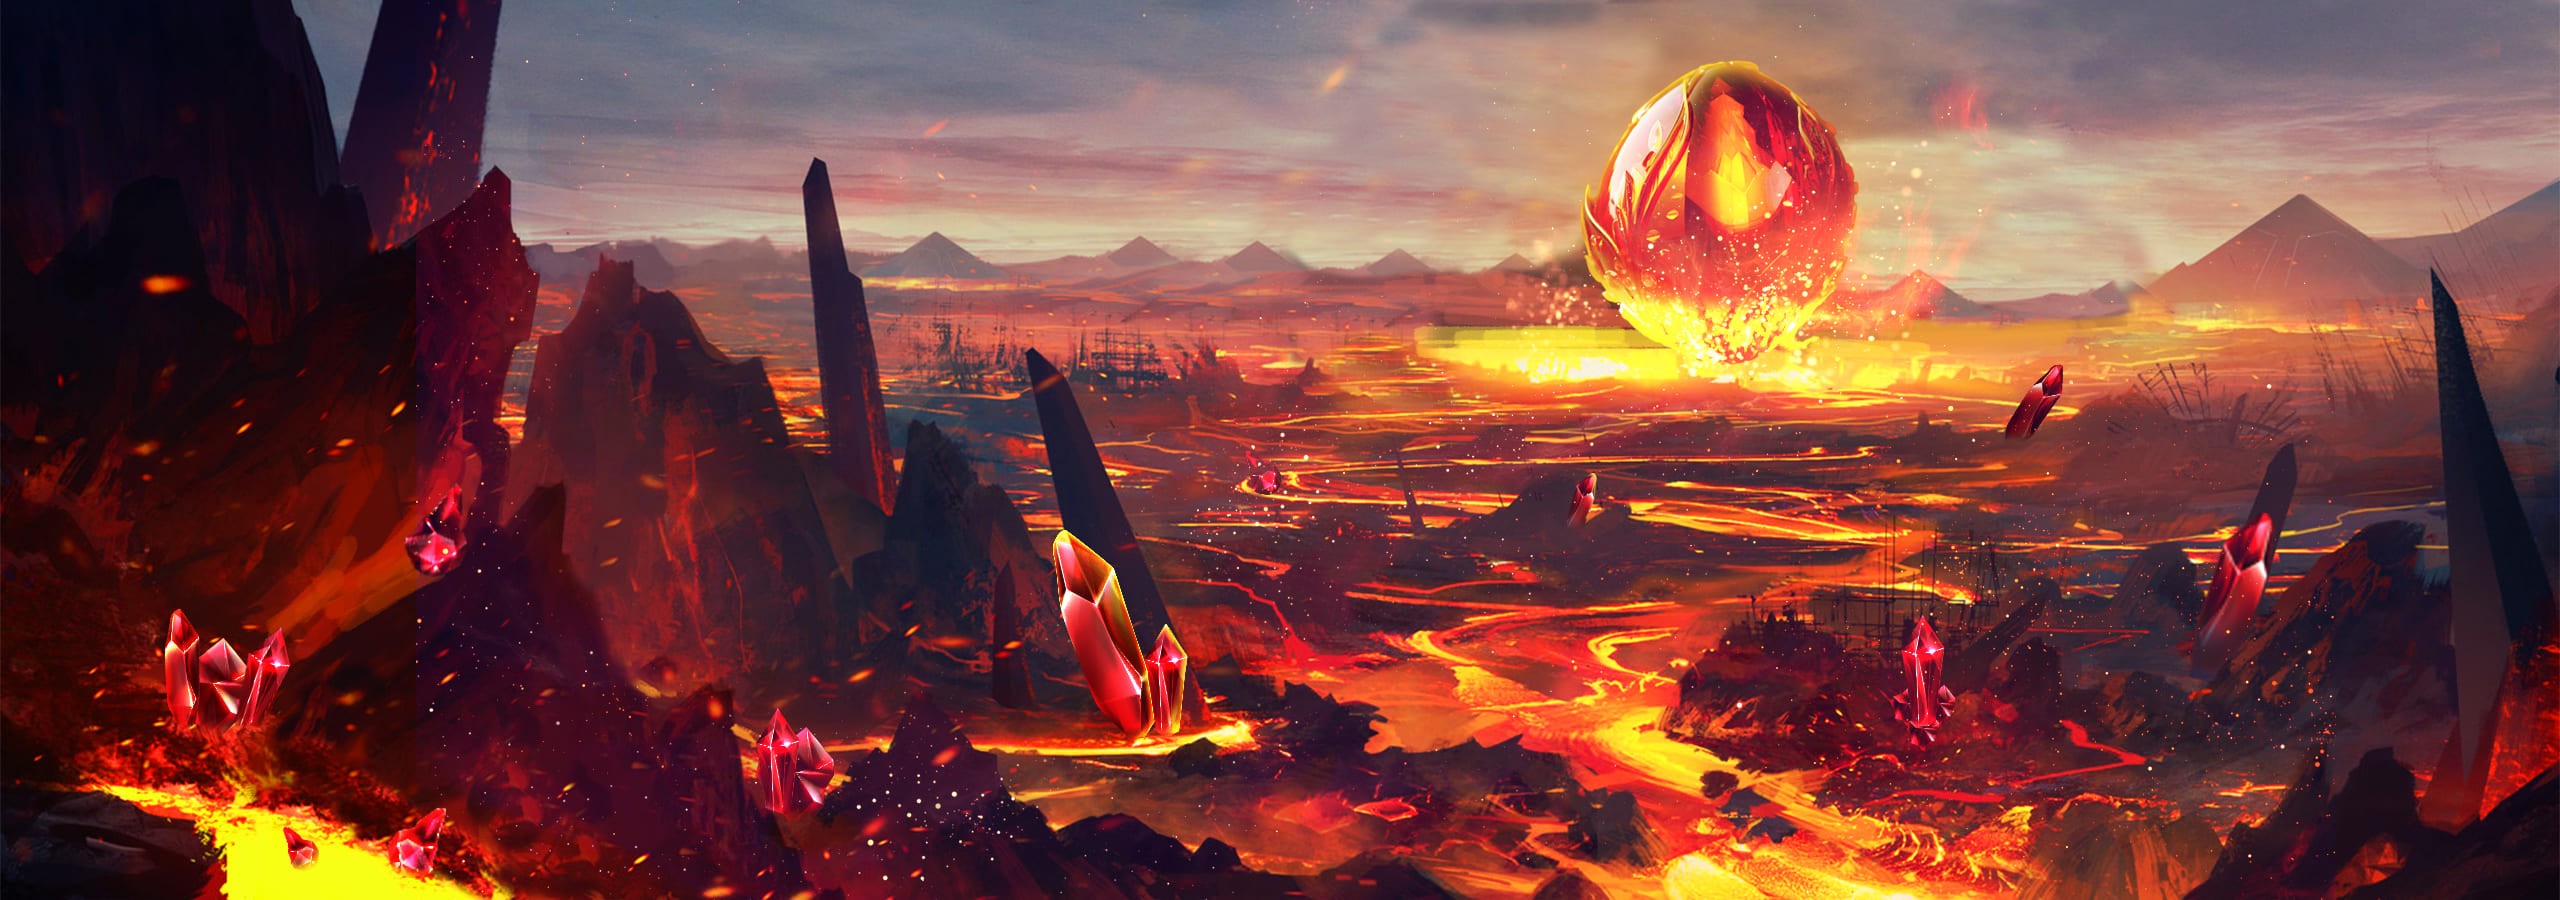 Super Phoenix's background